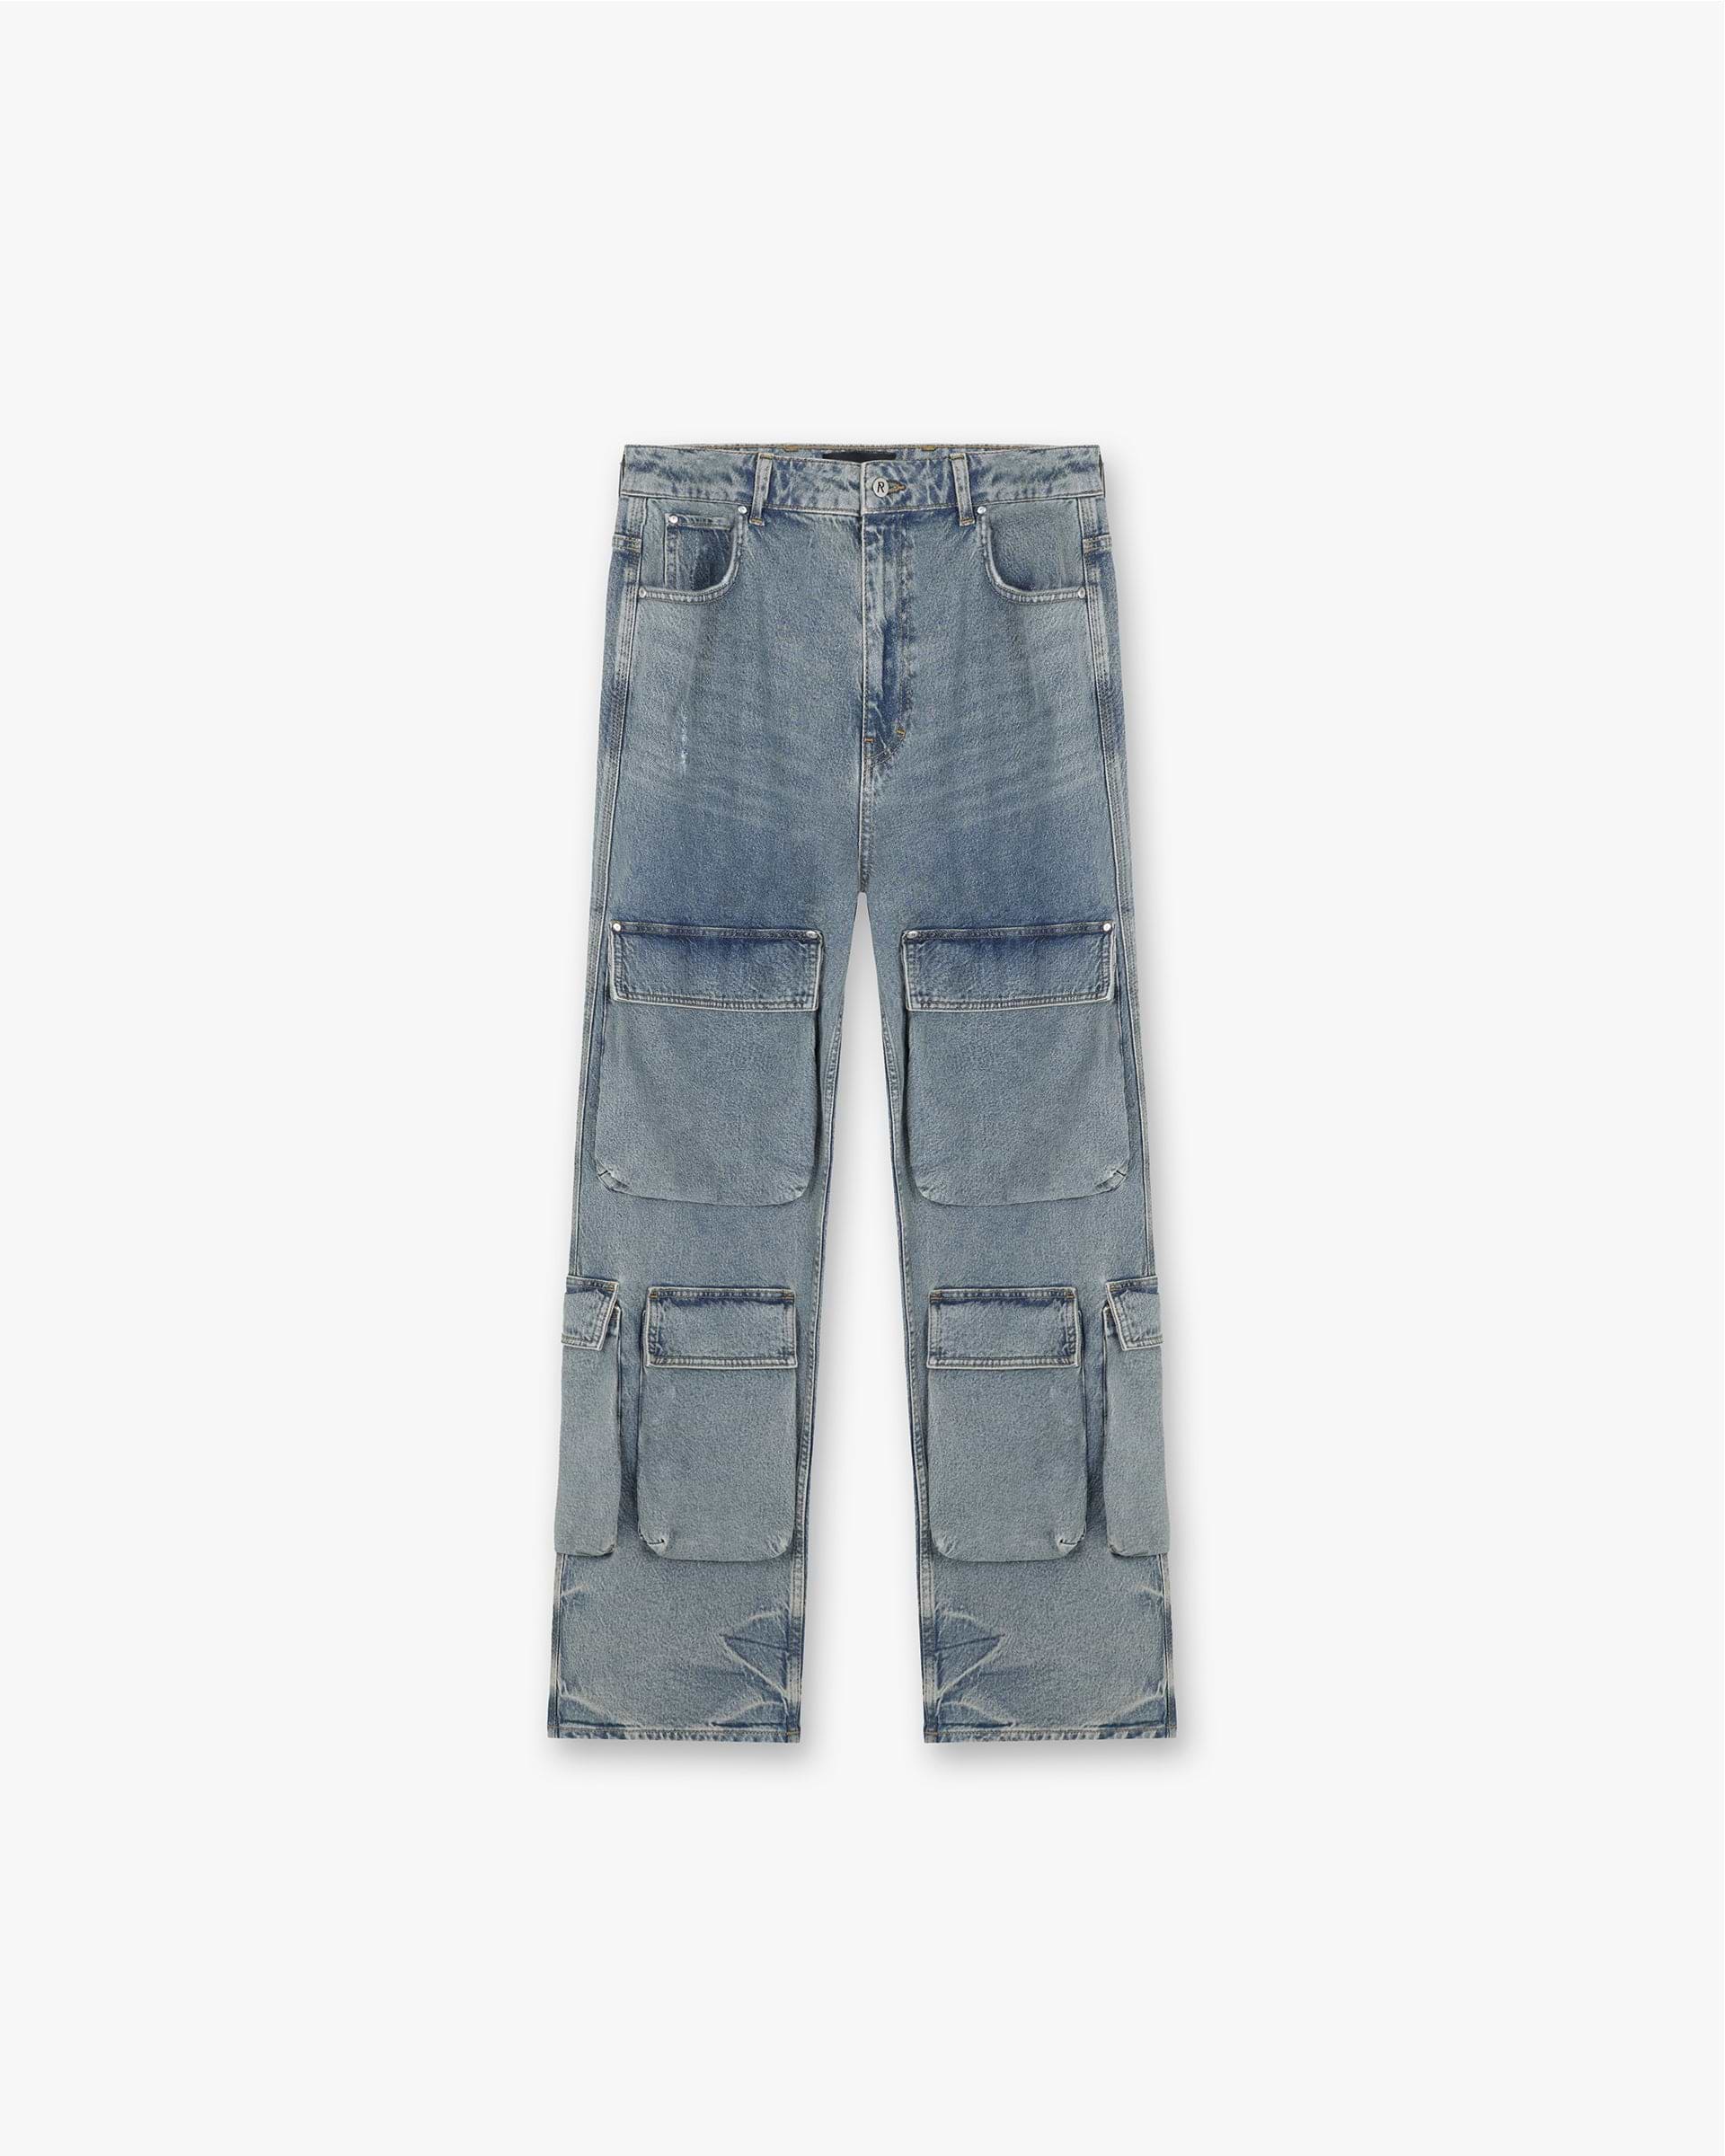 Earl Jeans, Jeans, Earl Jeans Womens Cross Detail On Pockets Size 26 By  Measurements Length 3 In